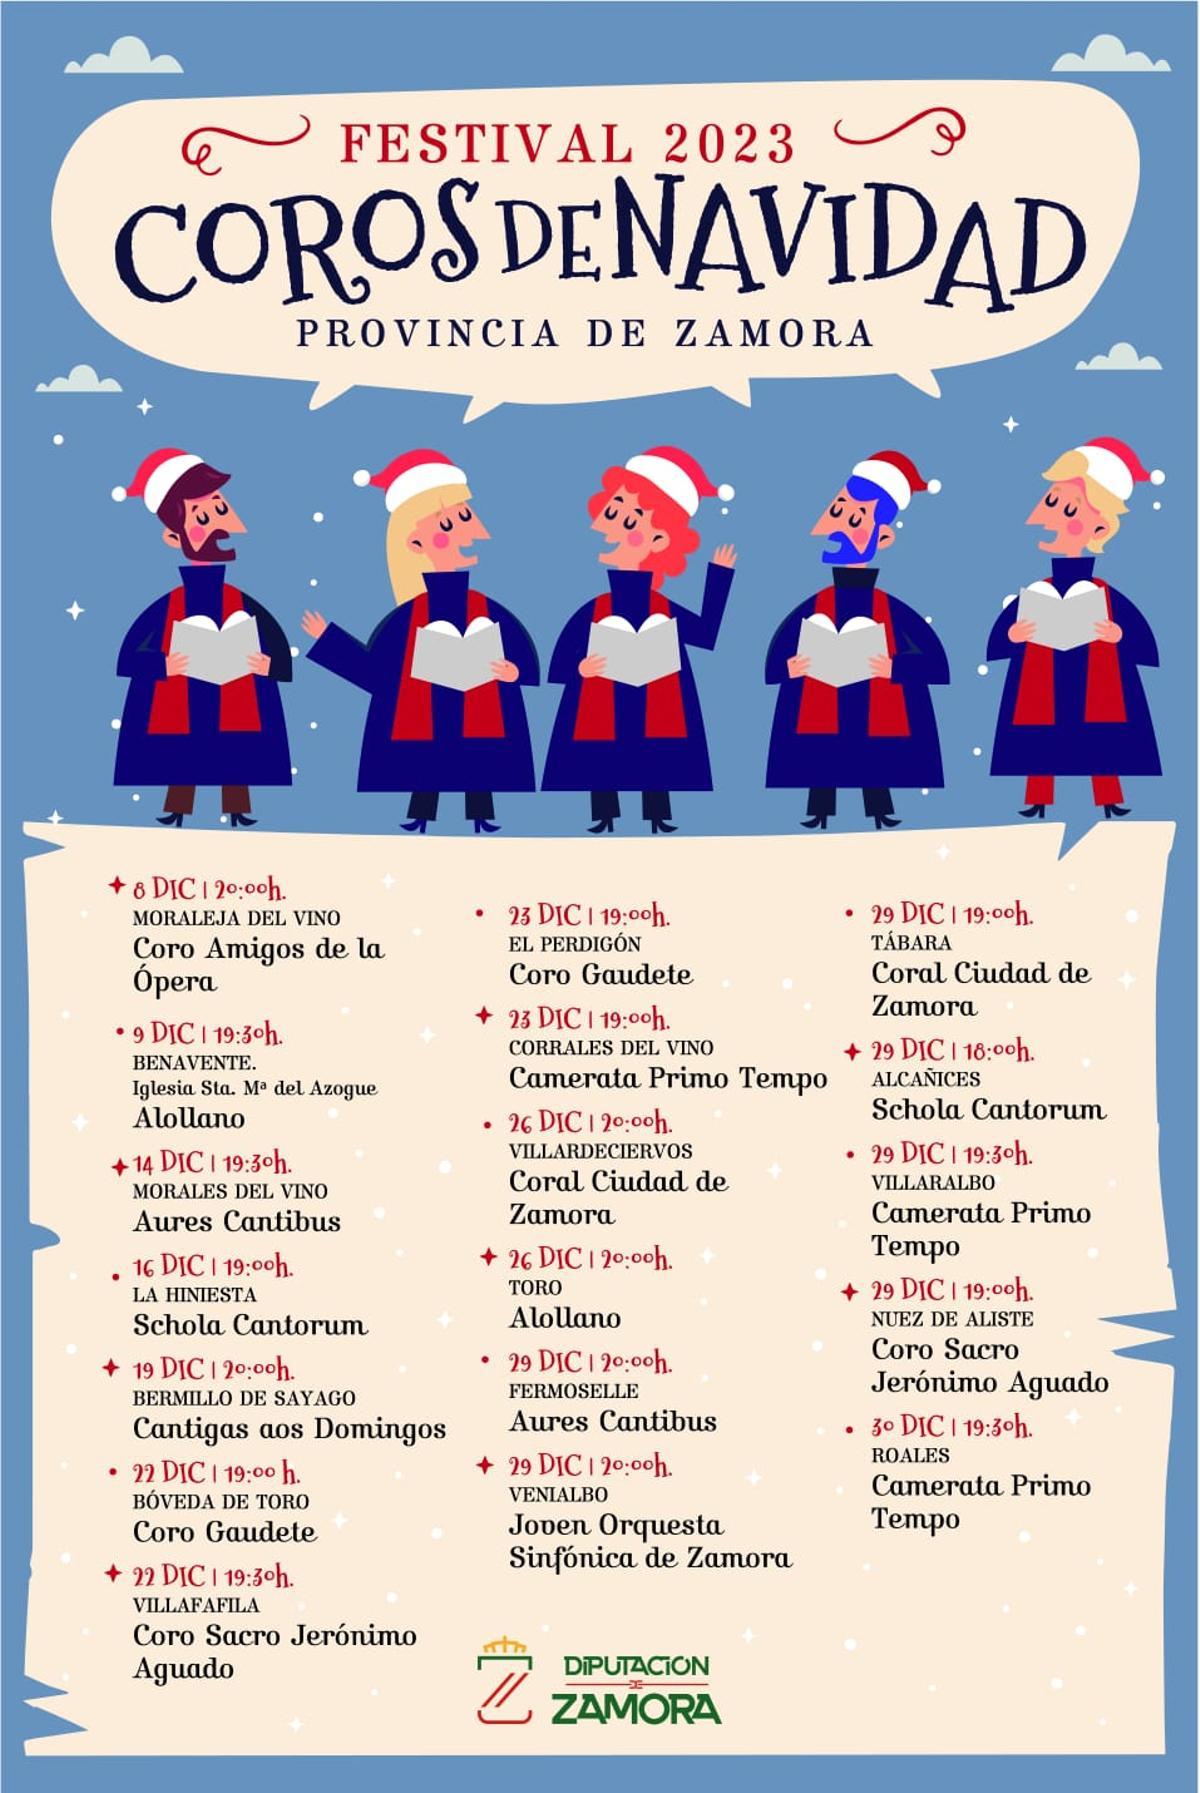 Programa del Primer Festiva Coros de Navidad de la Provincia de Zamora 2023